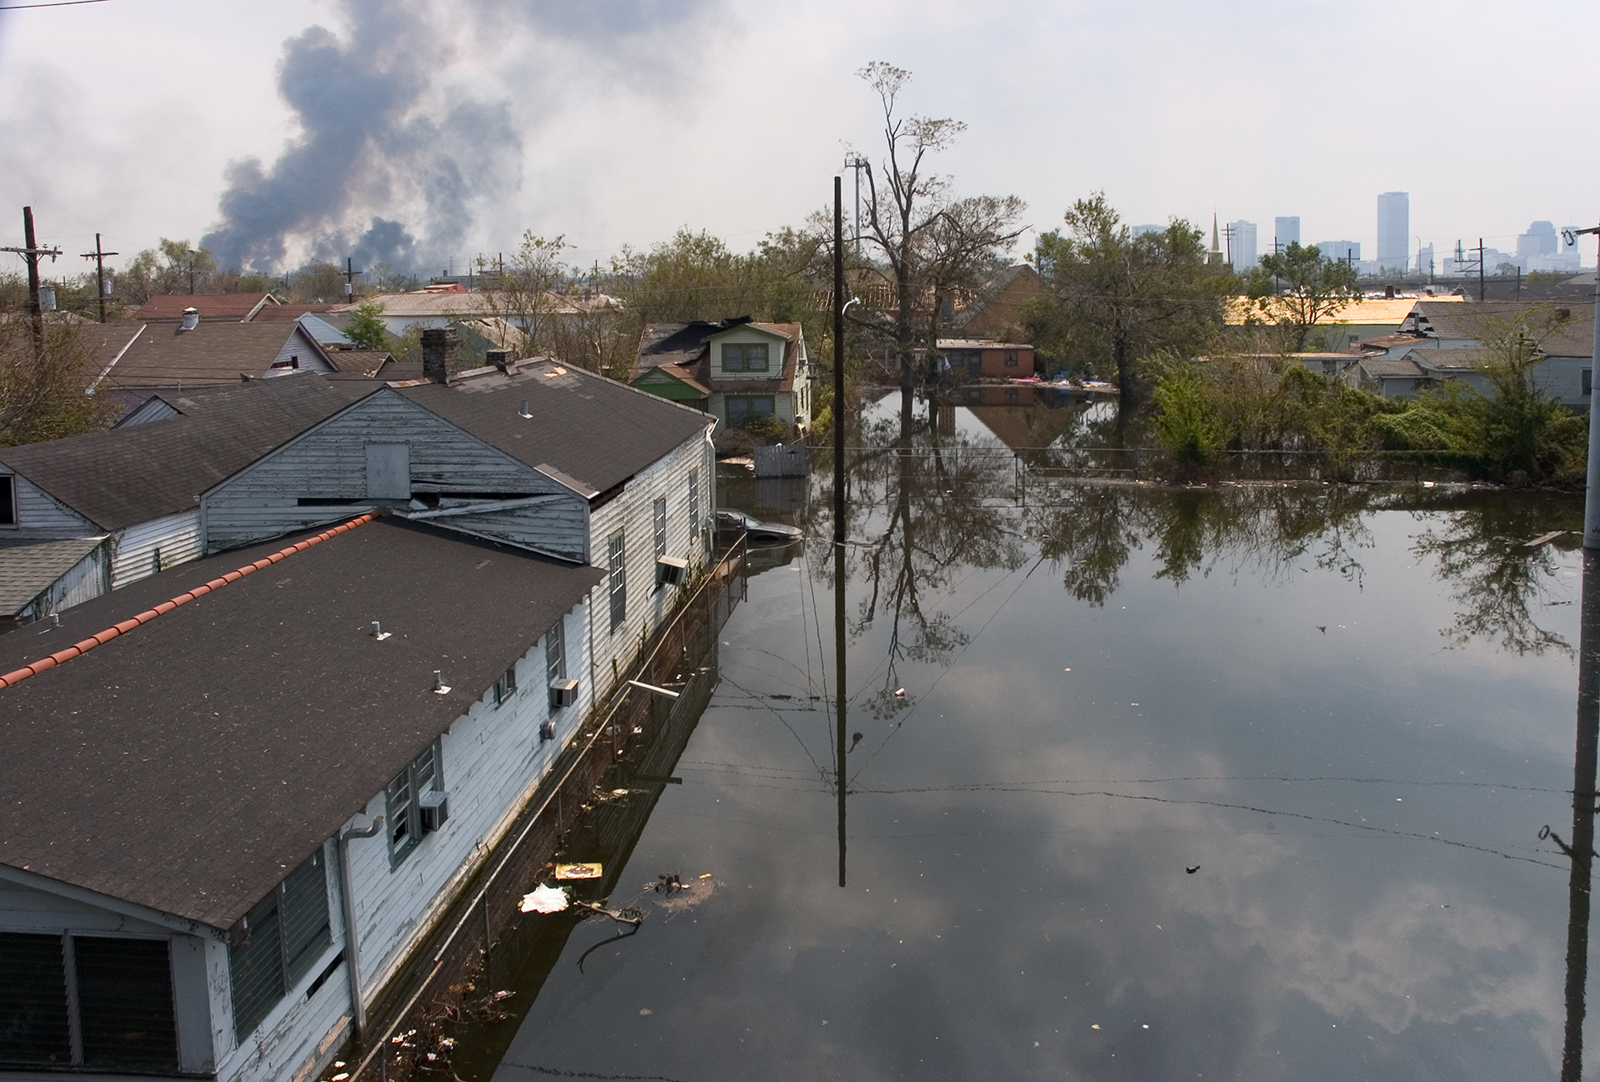 New Orleans Hurricane Katrina Flooding Damage